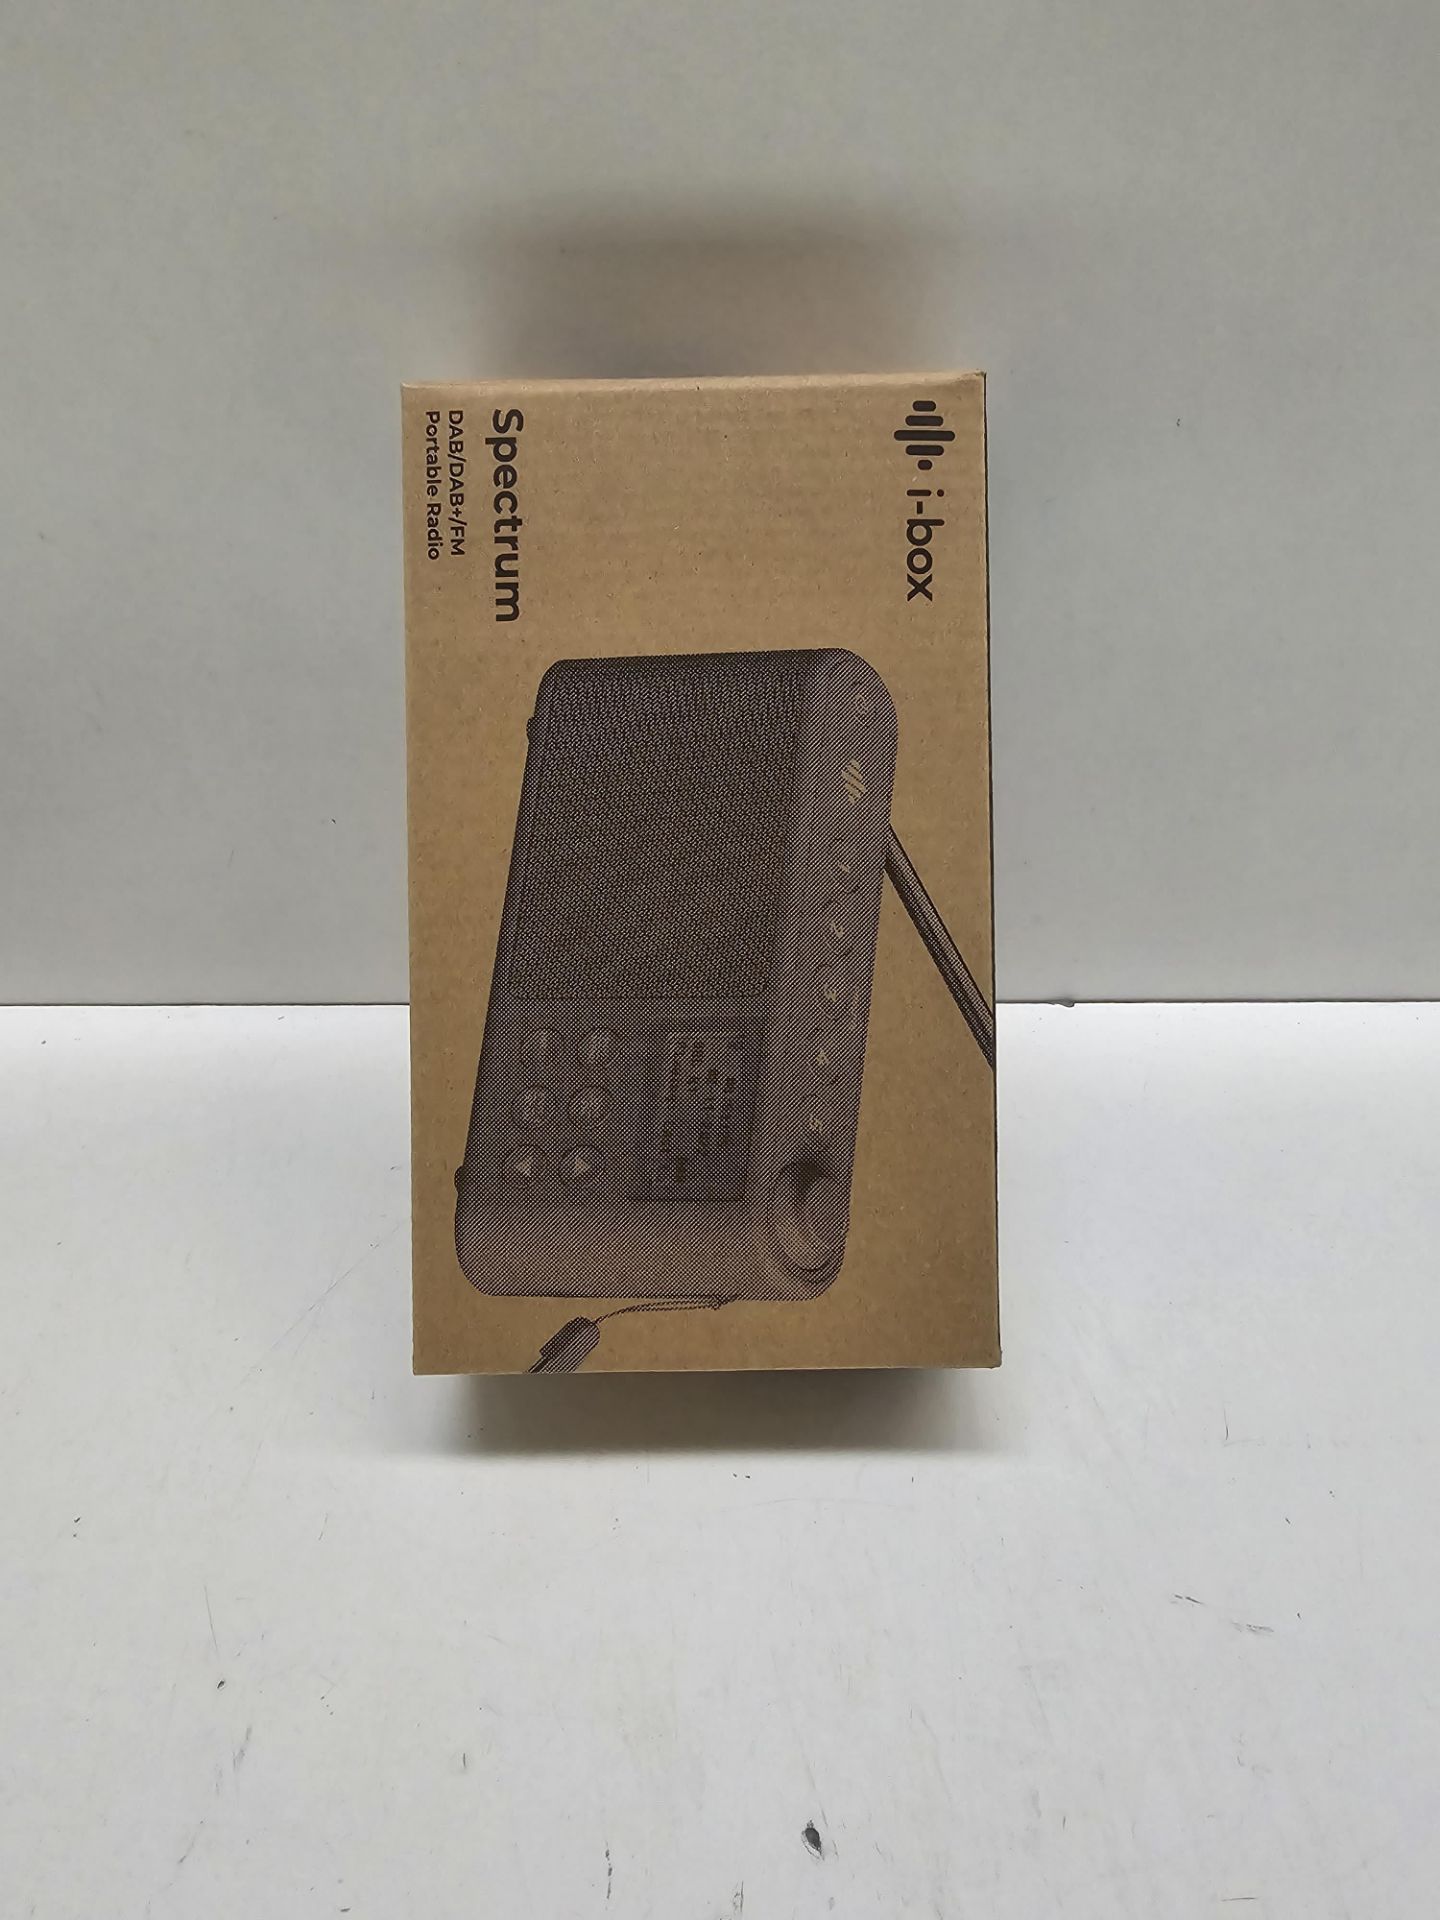 RRP £36.52 DAB Radio Portable - Image 2 of 2